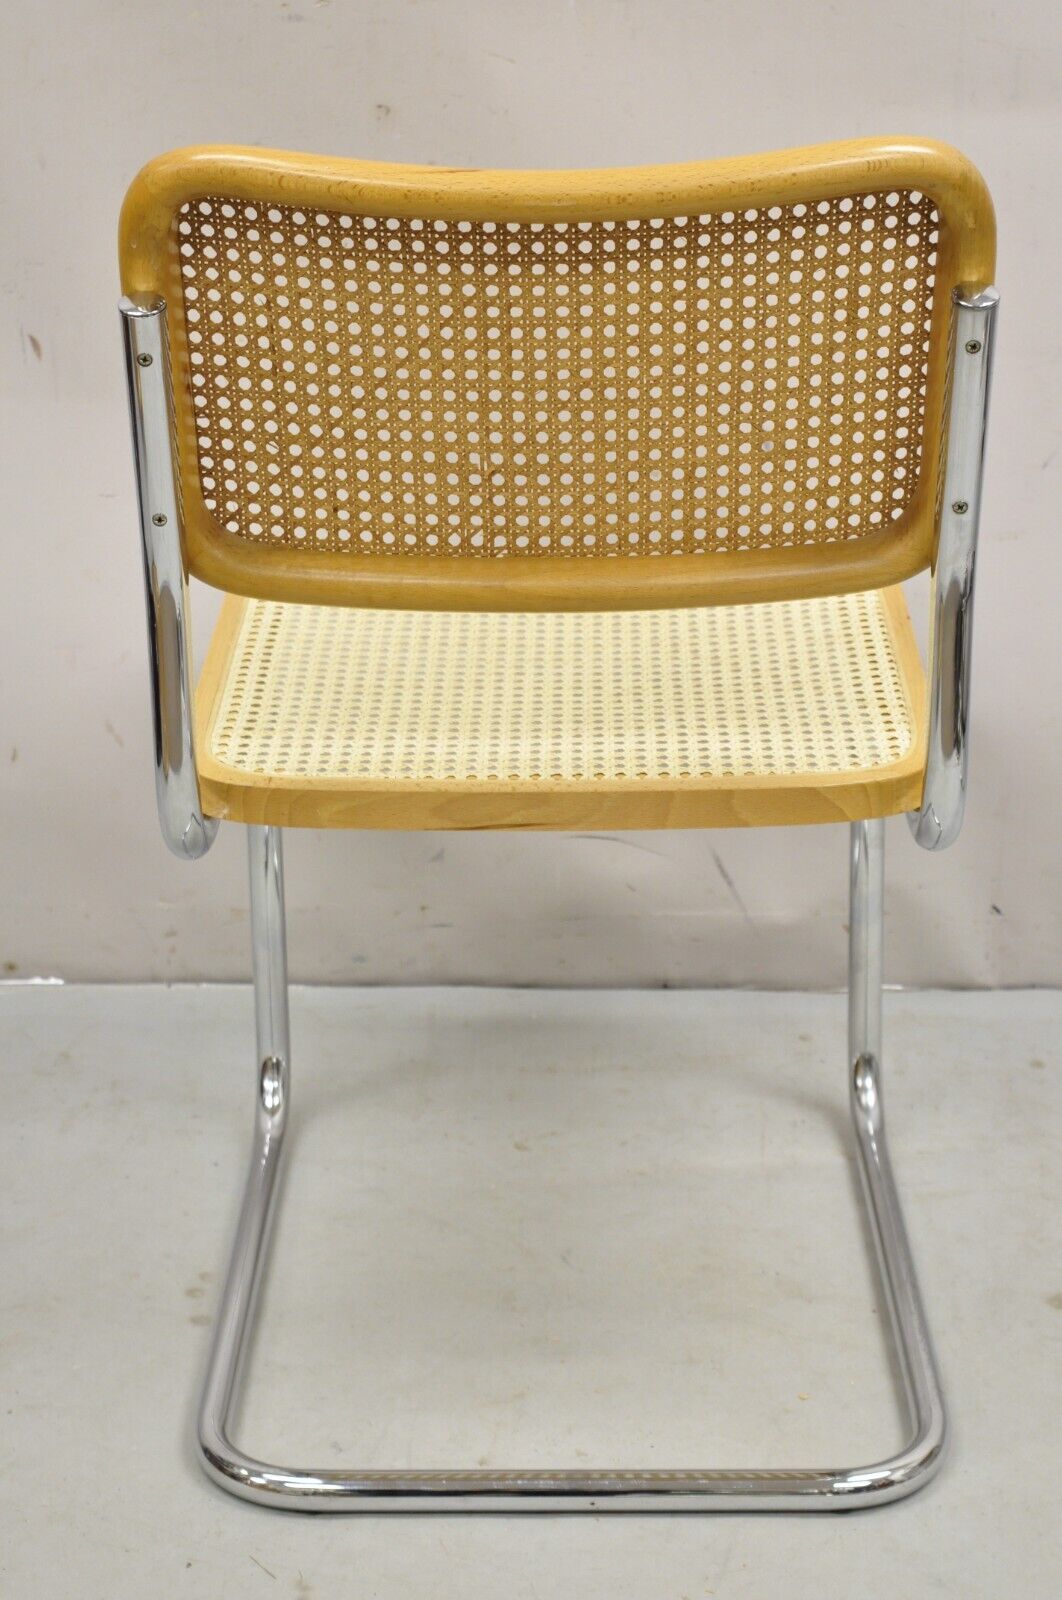 Marcel Breuer Mid Century Modern Italian Cane Cesca Dining Side Chair - Set of 4